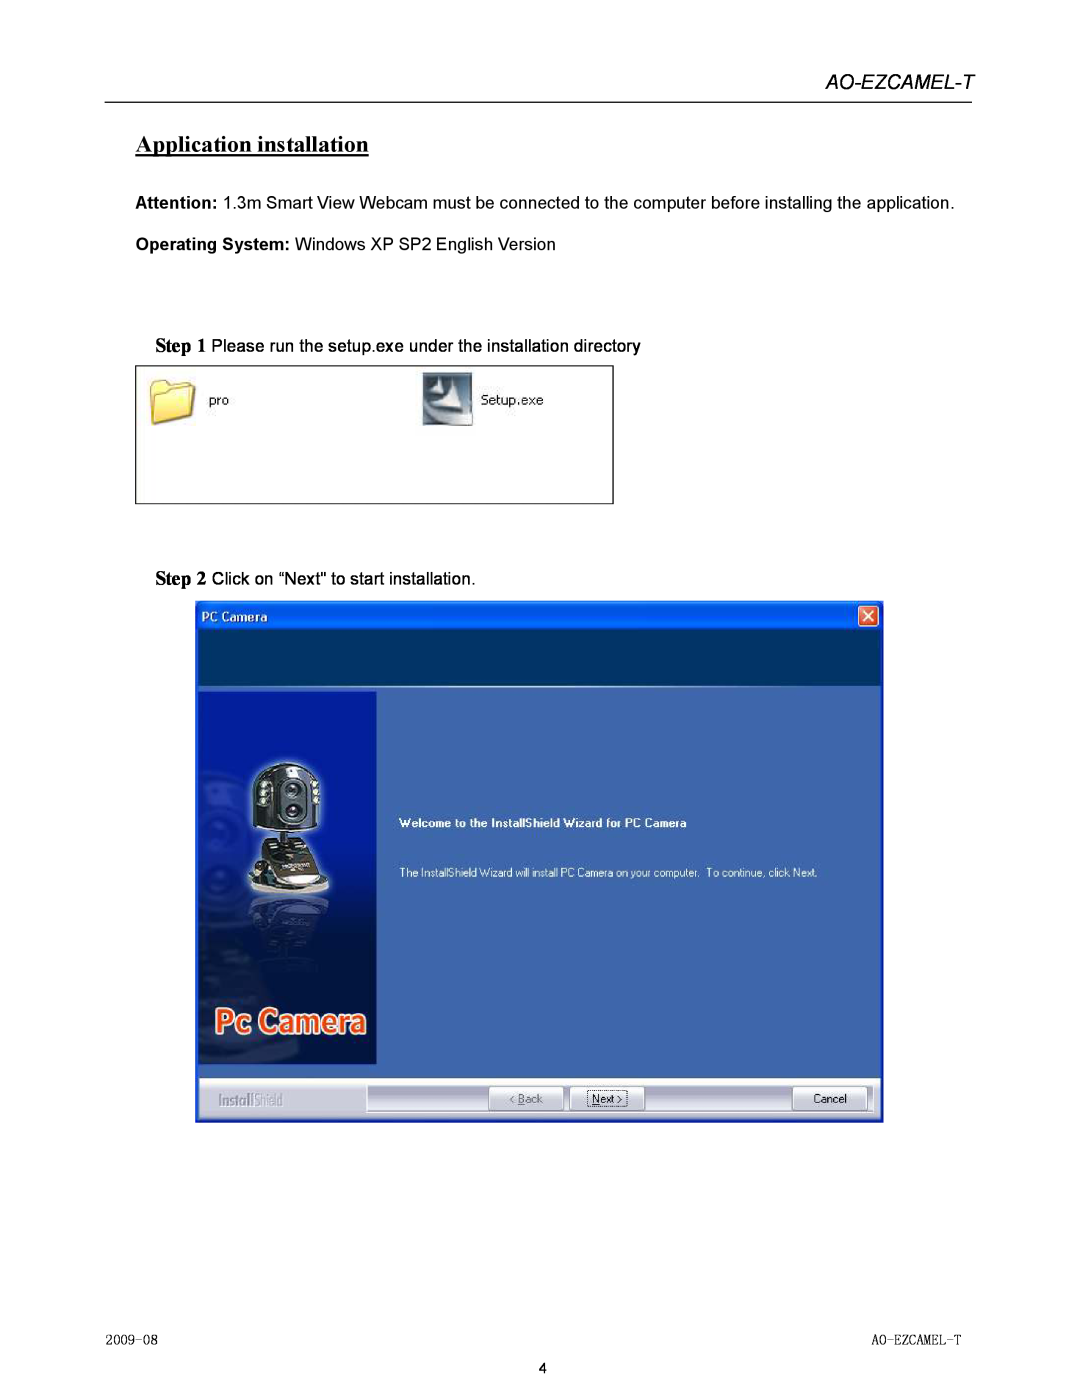 Laser AO-EZCAMEL-T manual Application installation, Ao-Ezcamel-T, Operating System Windows XP SP2 English Version, 2009-08 